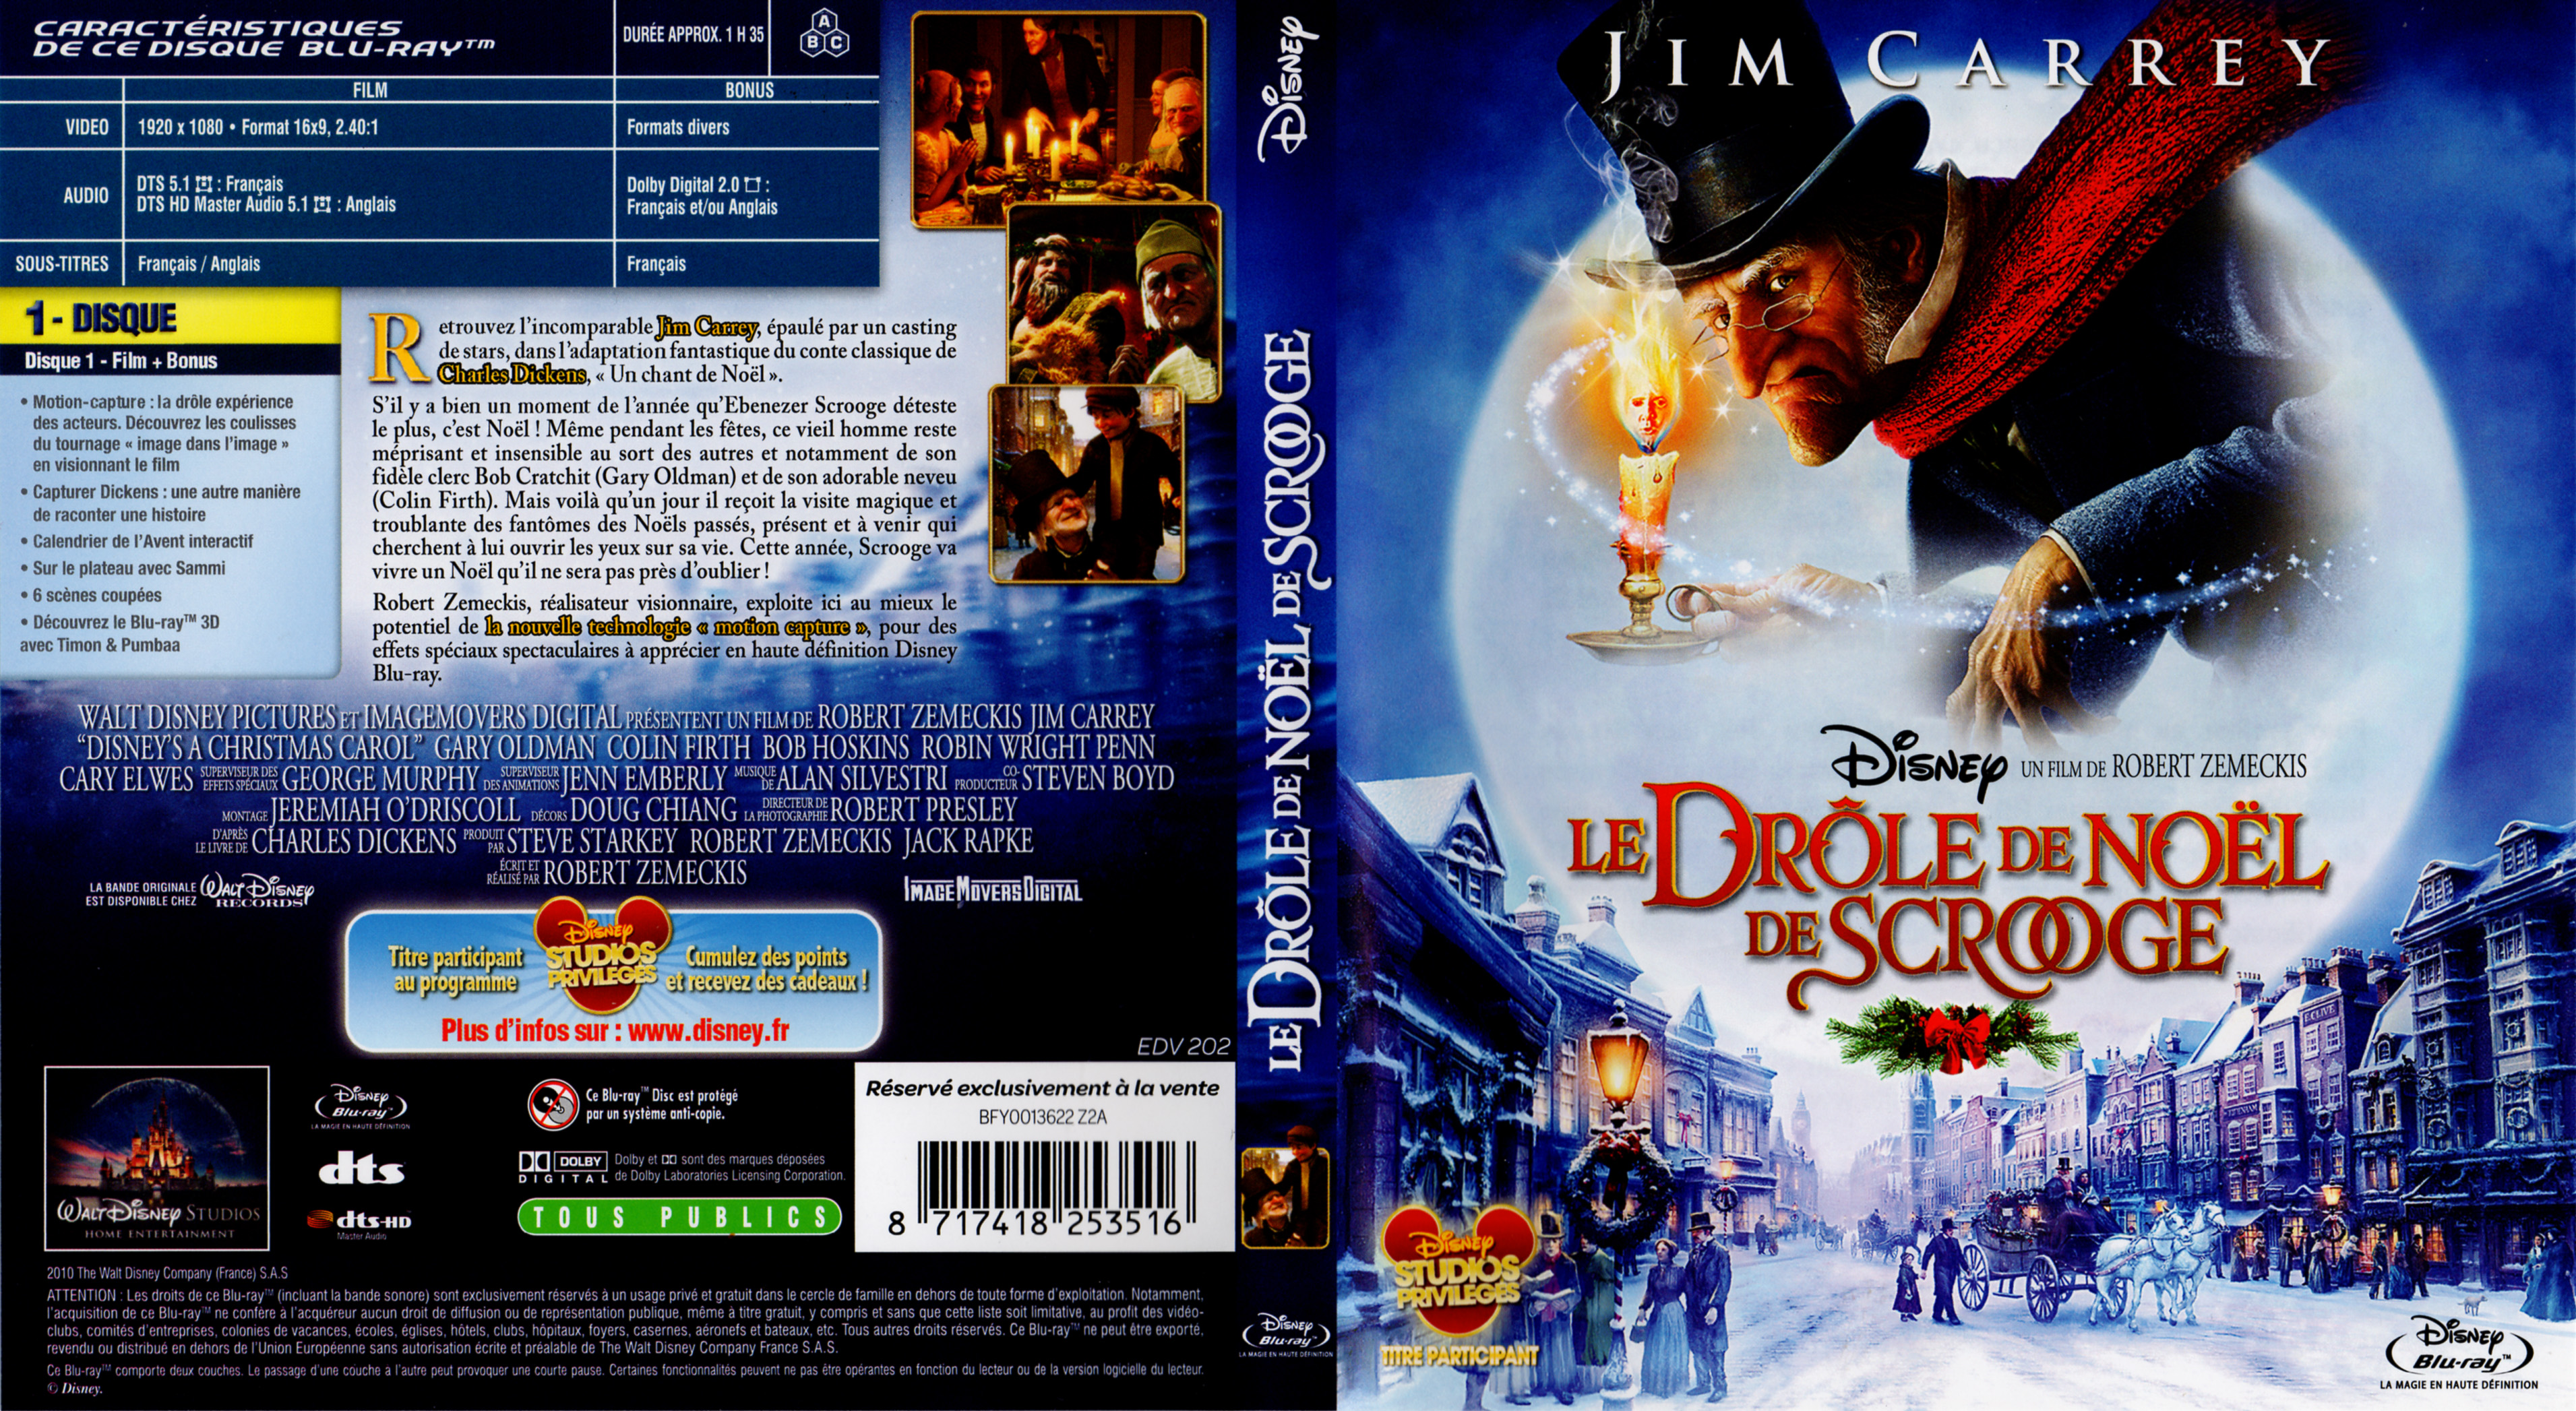 Jaquette DVD Le drole de Noel de Scrooge (BLU-RAY) v2